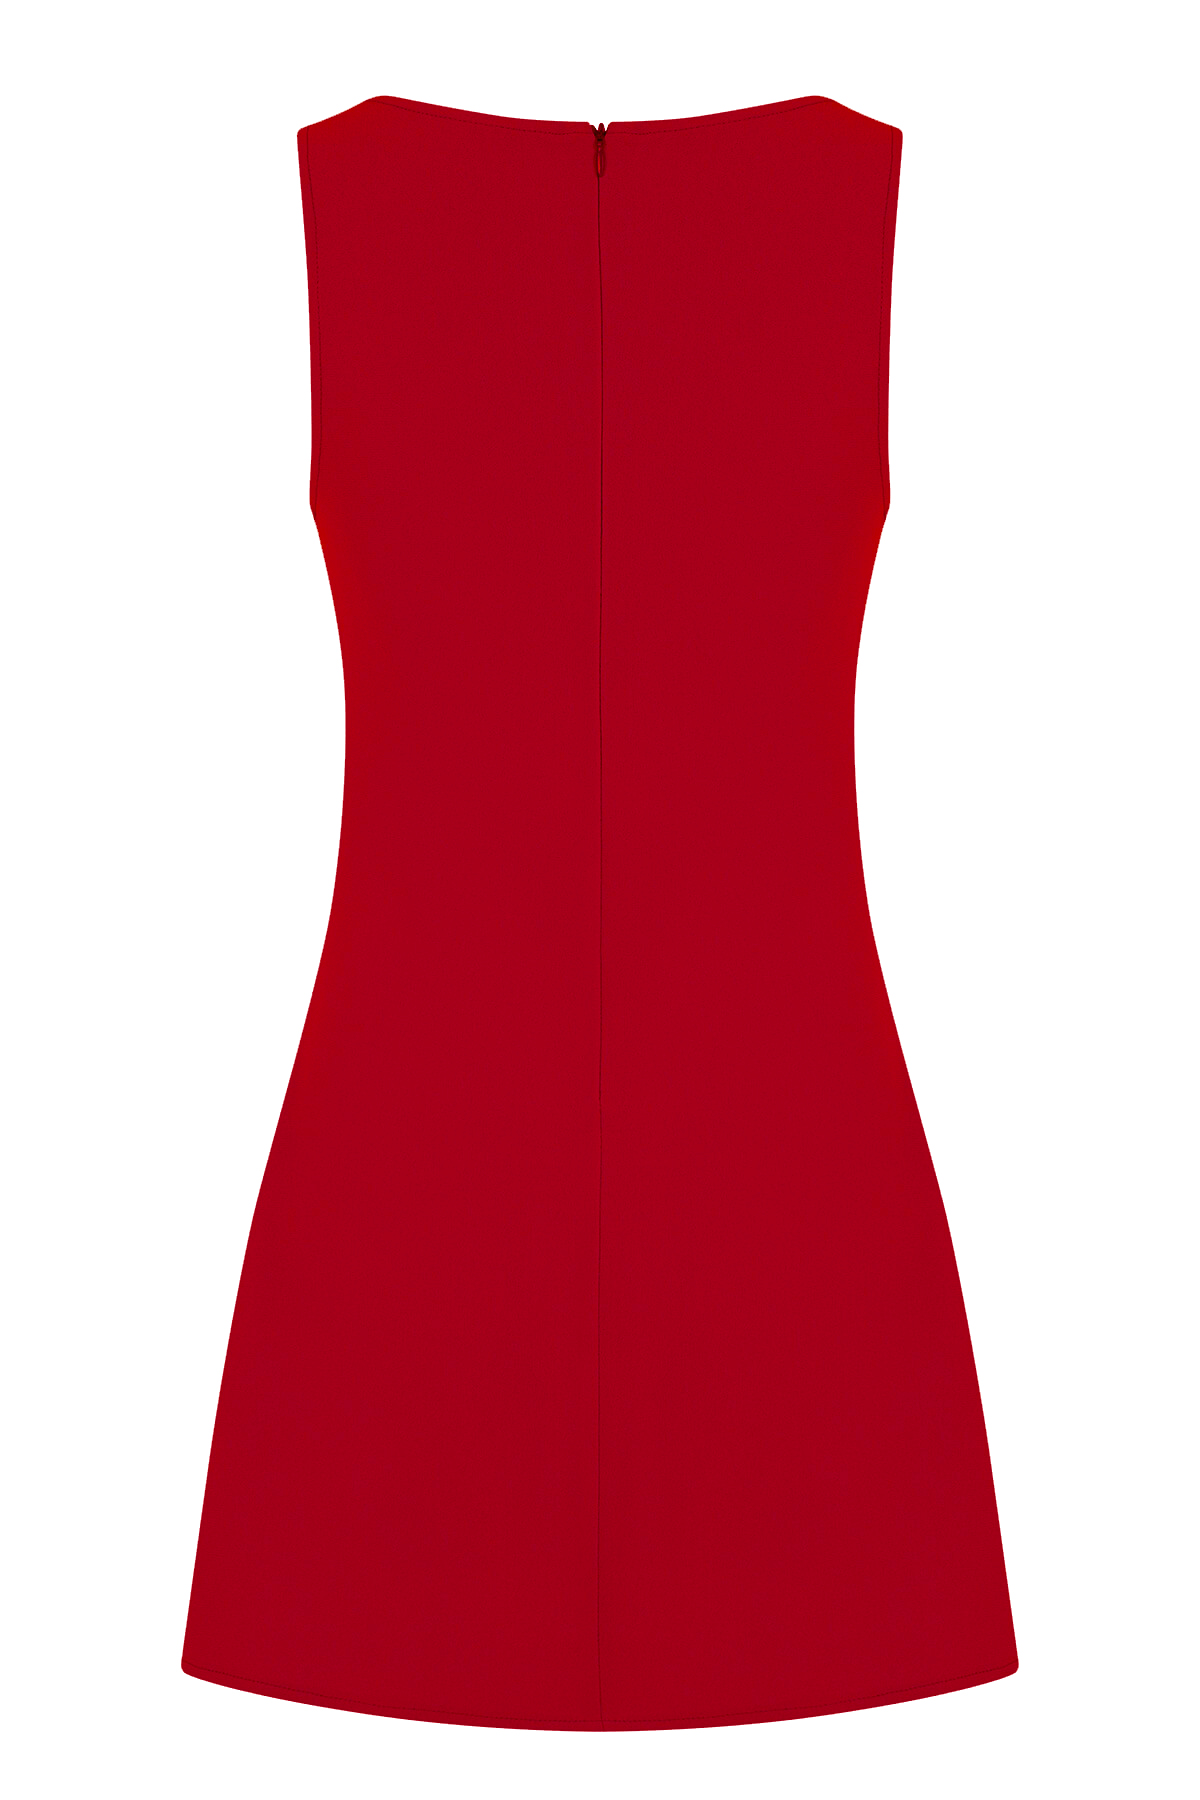 BARBIE Crepe Red Mini Athlete Dress